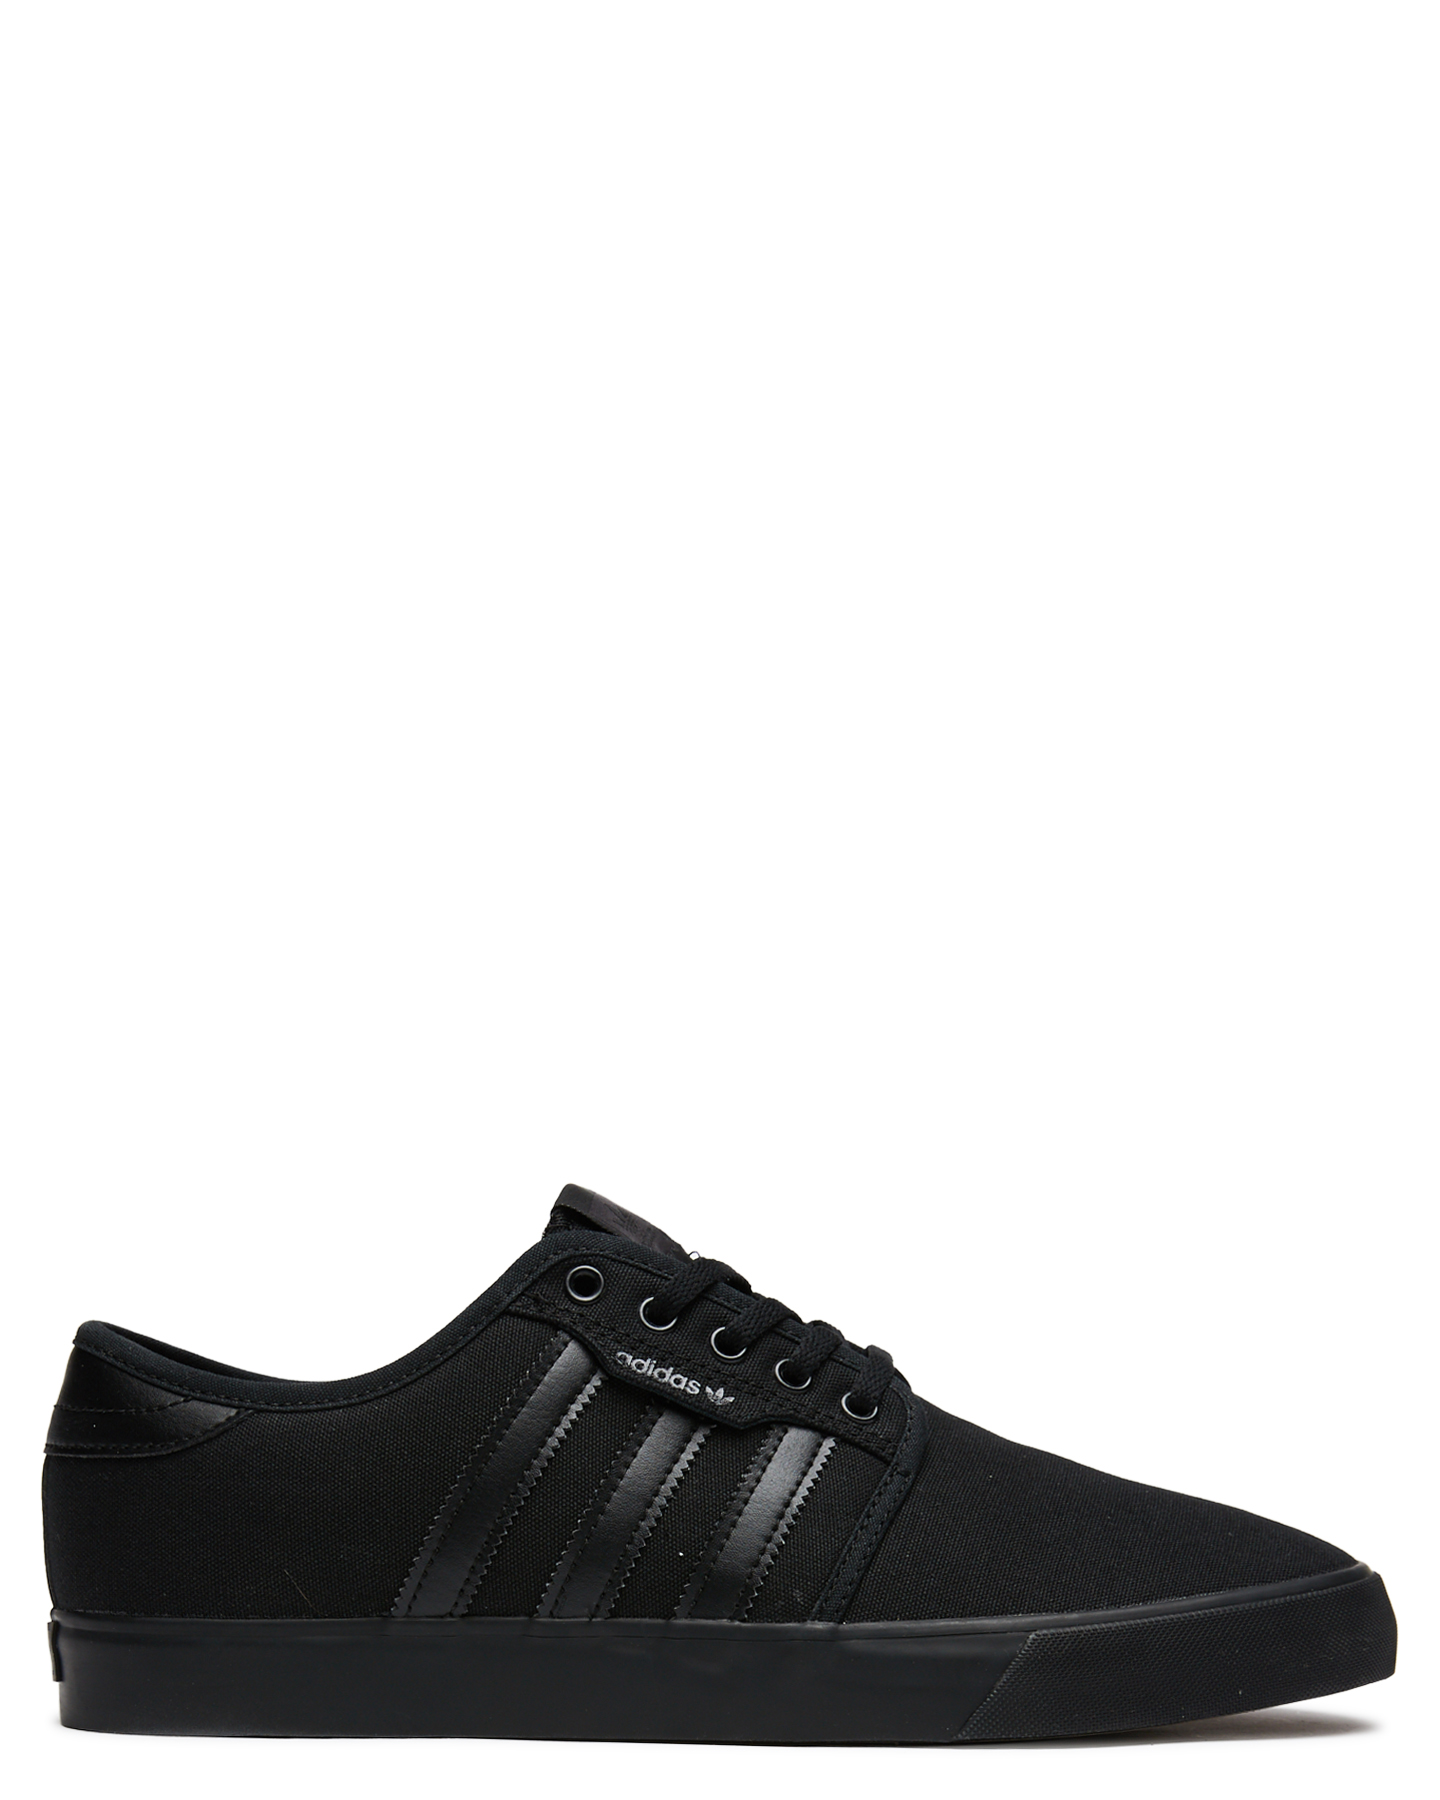 Adidas Womens Seeley Shoe - Black Black 